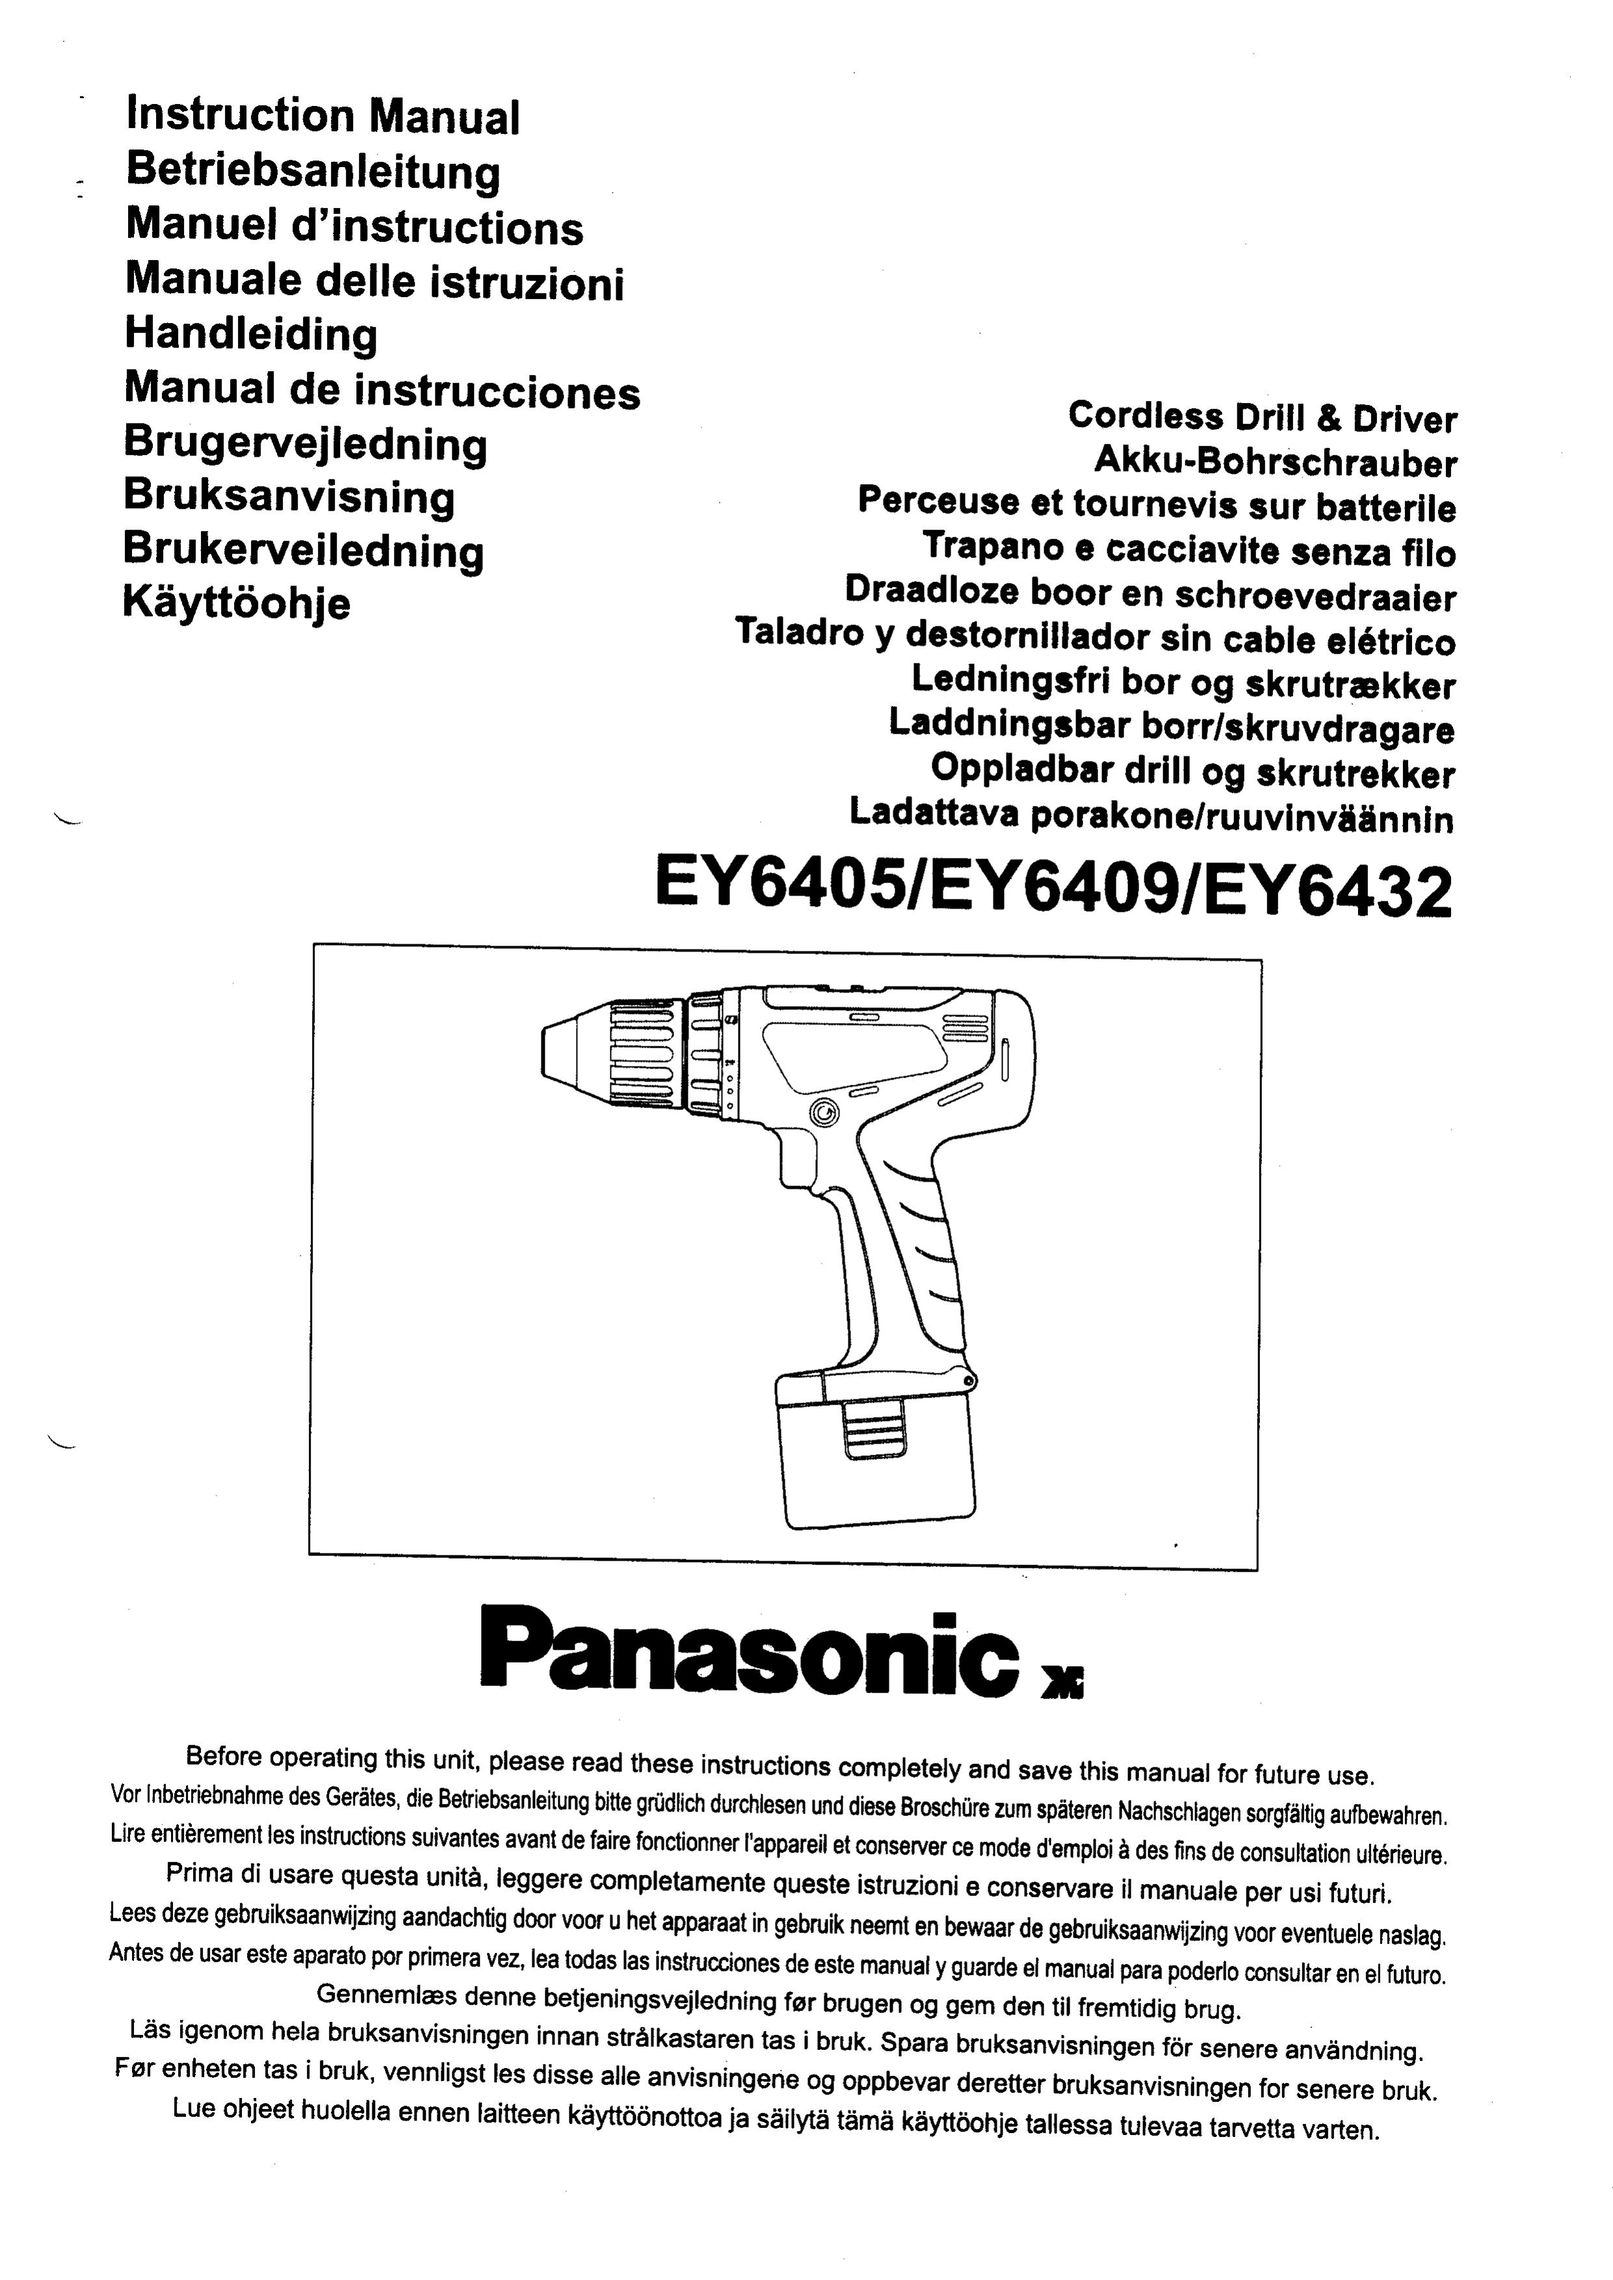 Panasonic EY6432 Drill User Manual